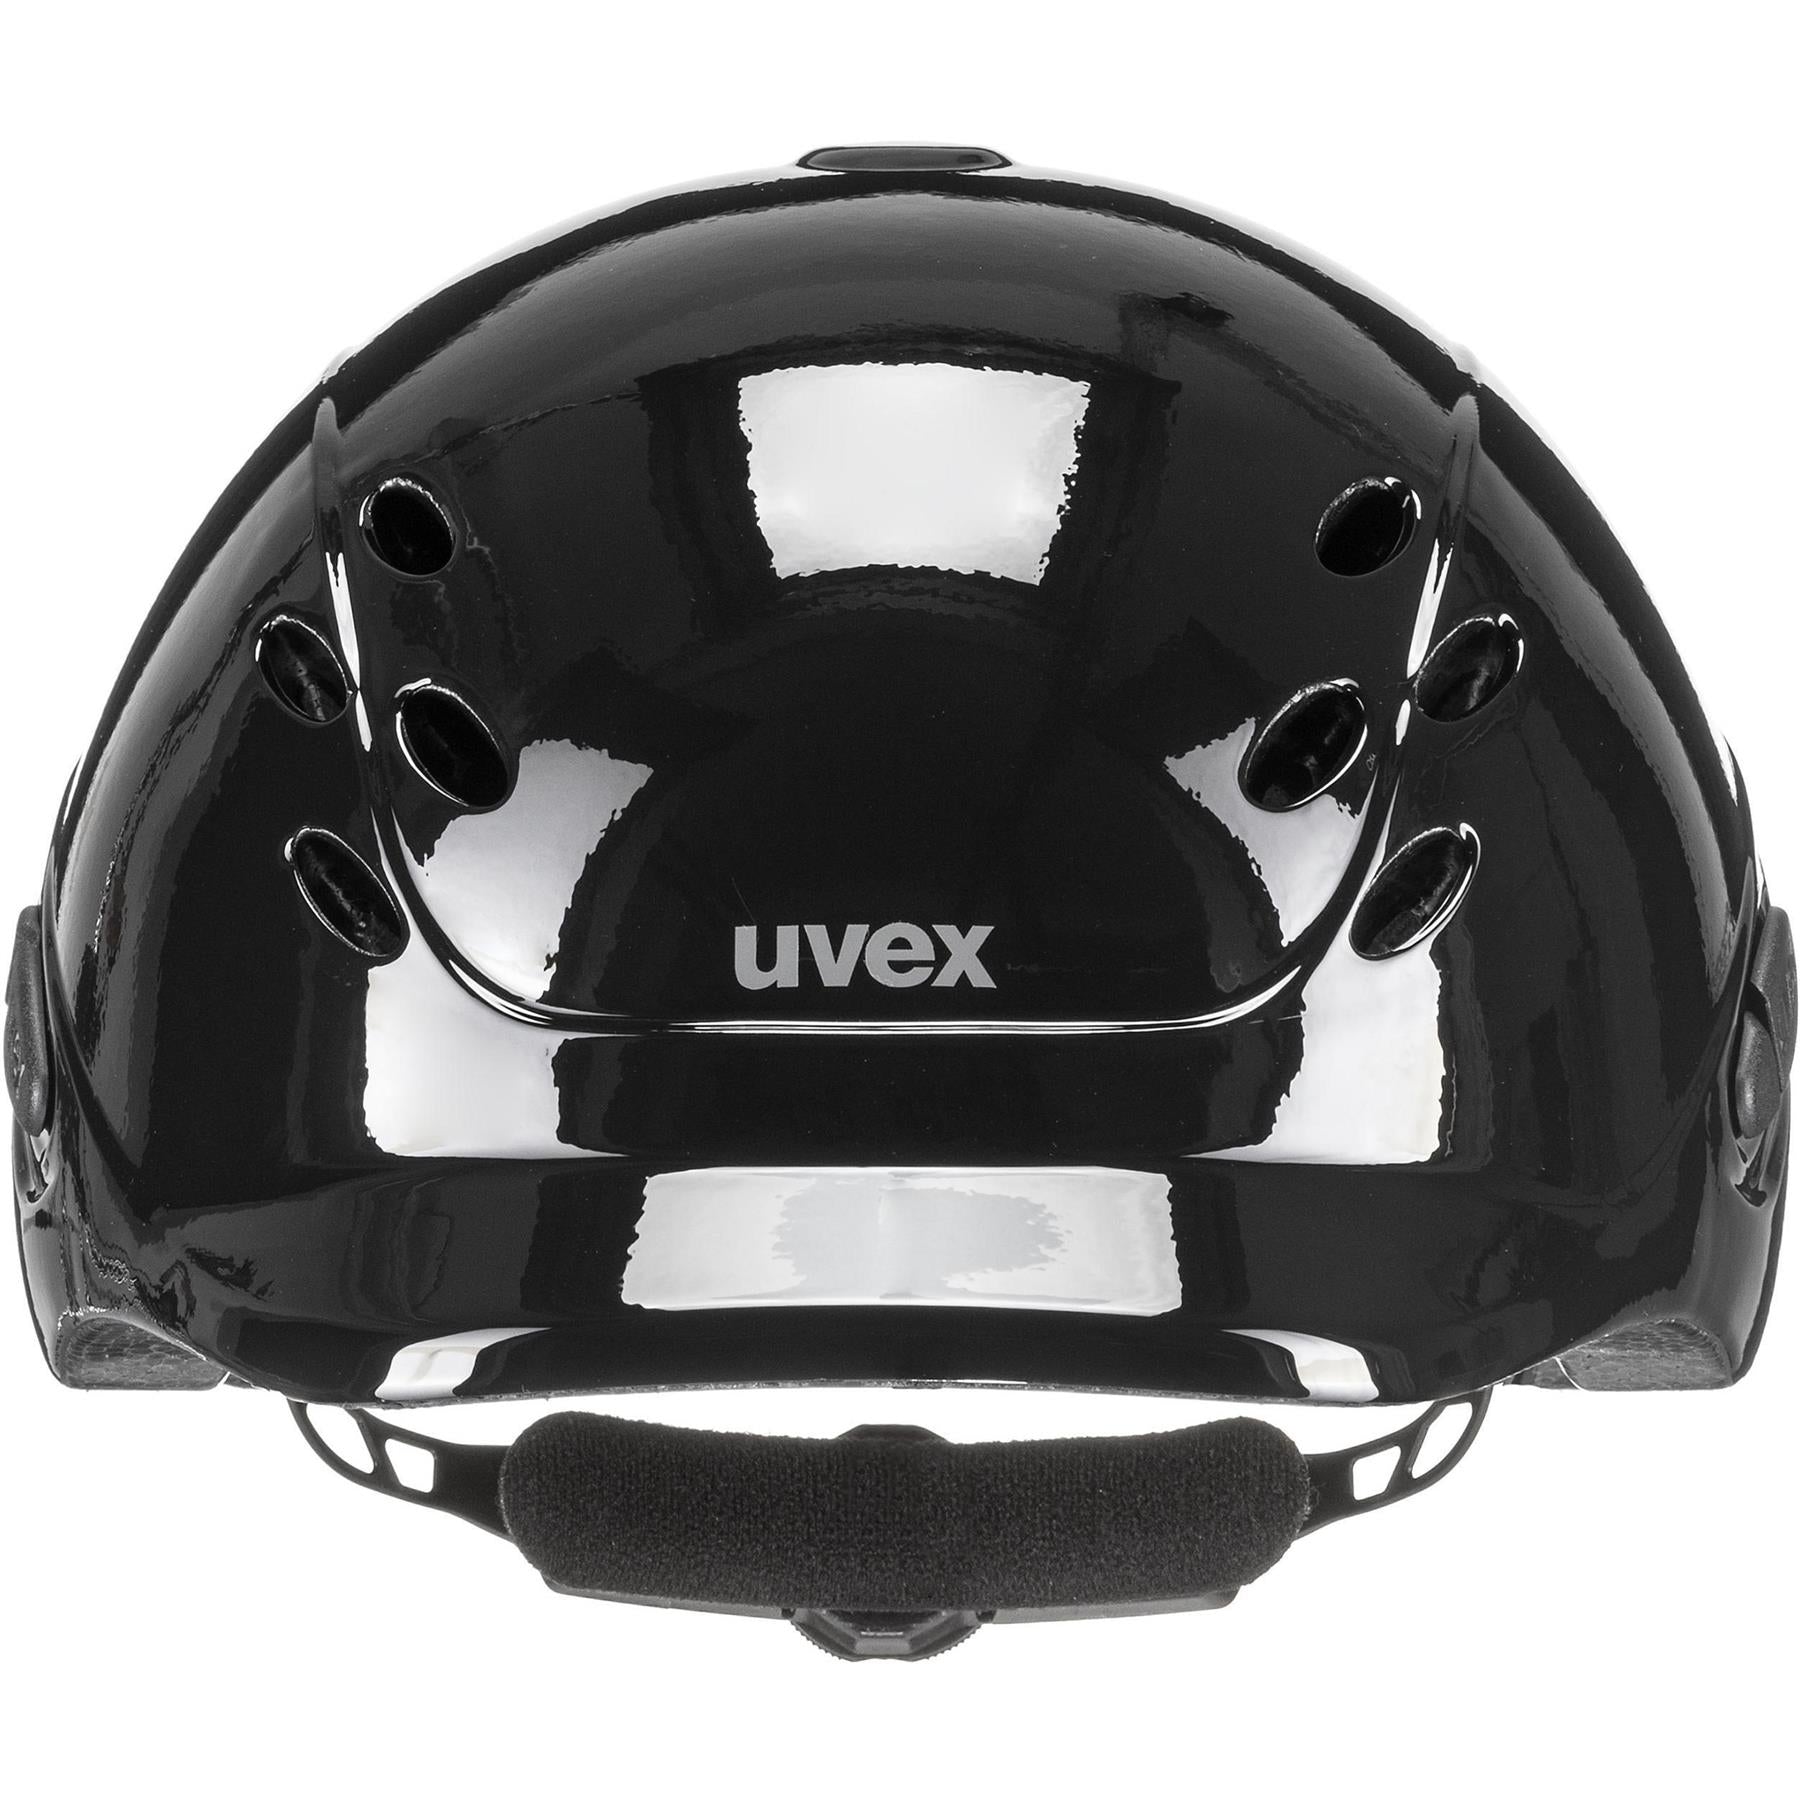 Uvex Onyxx Hat - Just Horse Riders